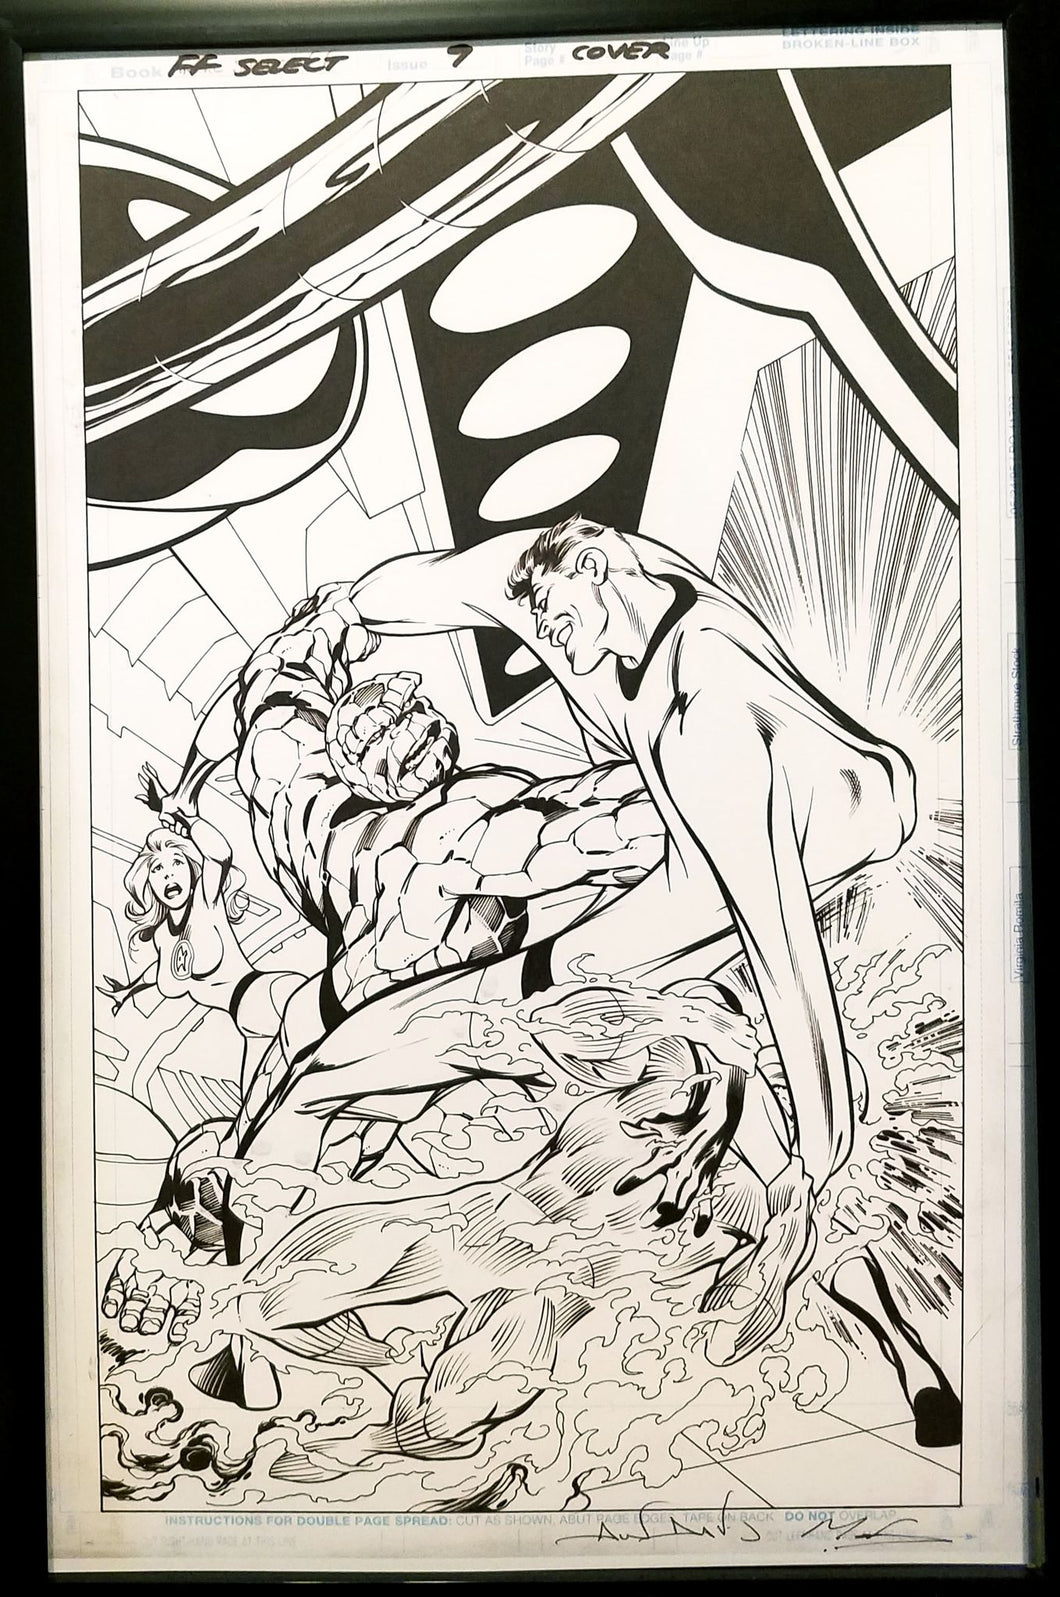 Fantastic Four Select #9 by Alan Davis 11x17 FRAMED Original Art Poster Marvel Comics